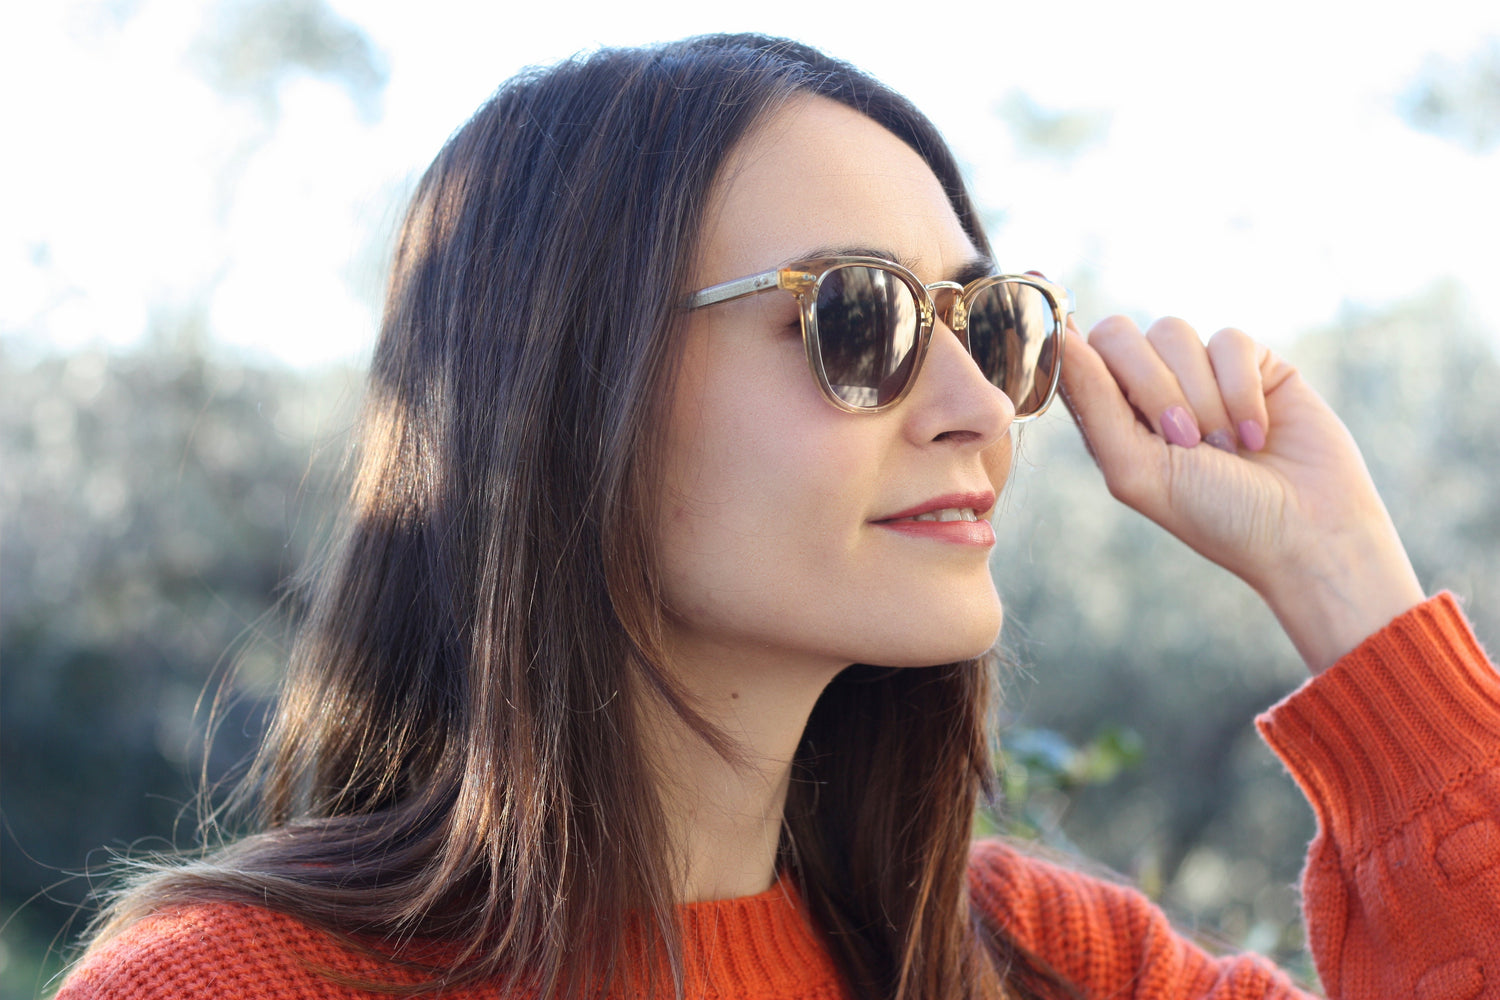 Should You Wear Blue Light Glasses While Watching Tv? | KOALAEYE OPTICAL